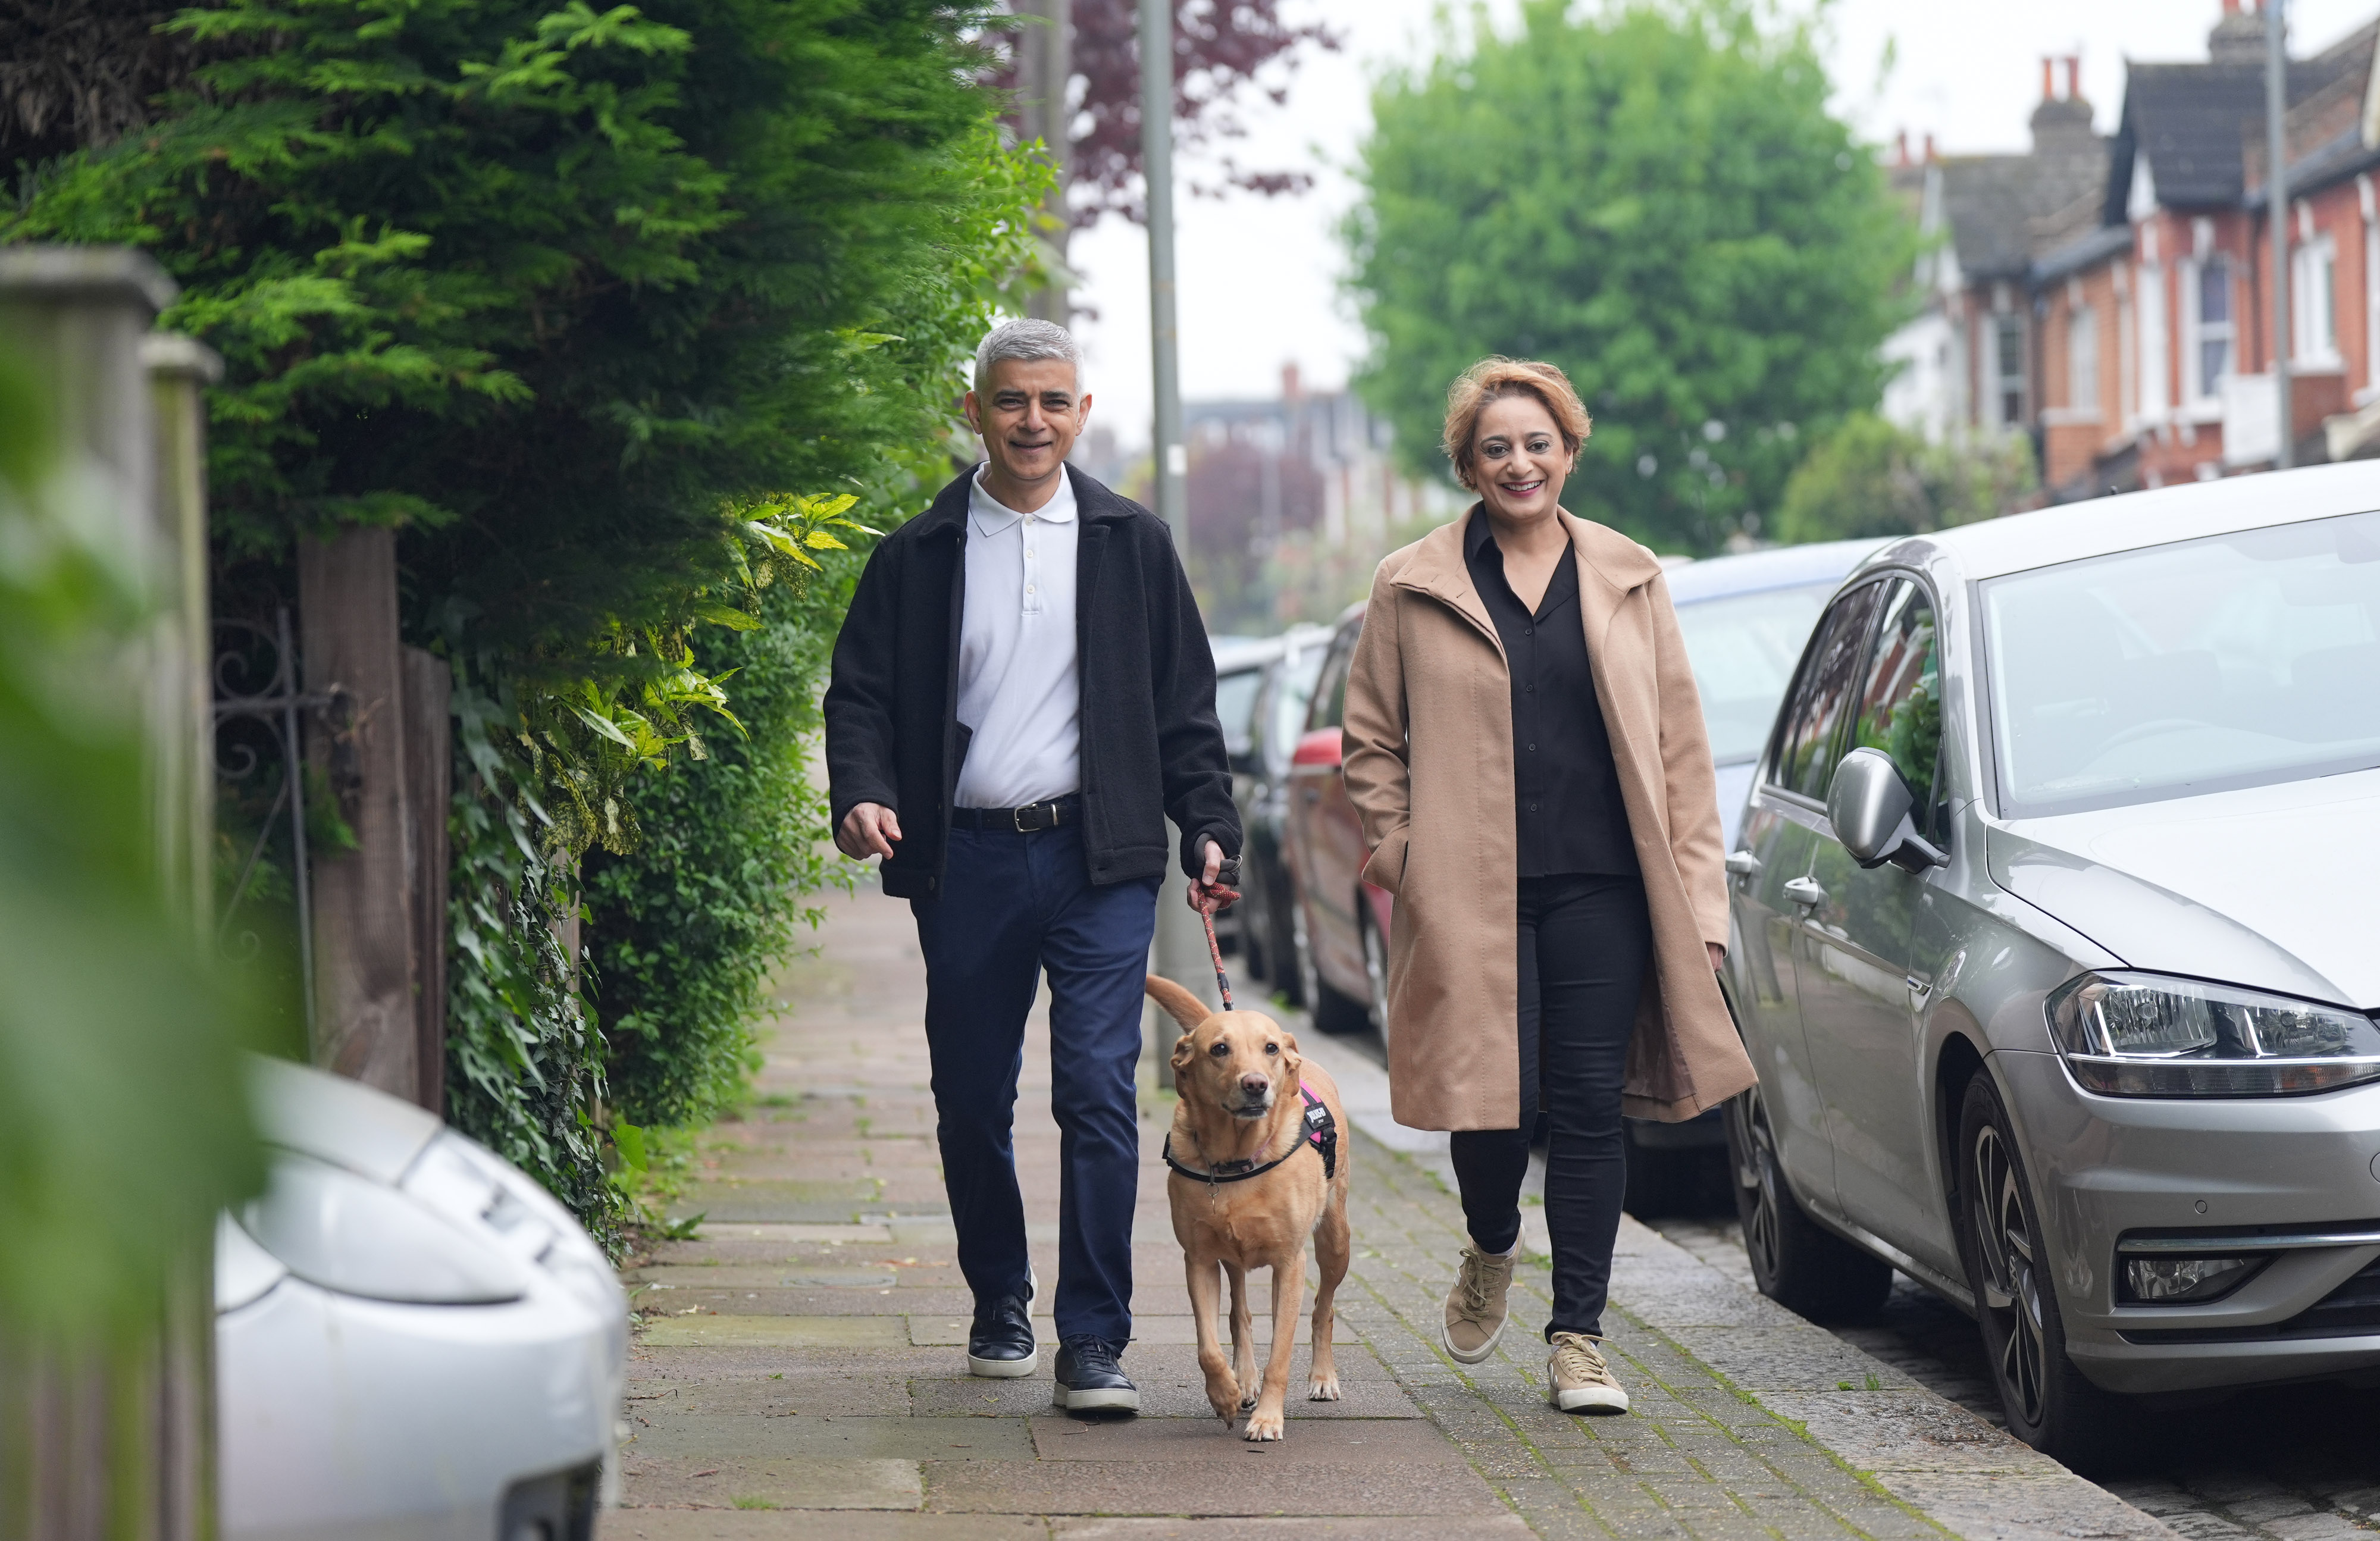 Current Mayor of London Sadiq Khan and wife Saadiya Khan headed along this morning, too - with dog Luna